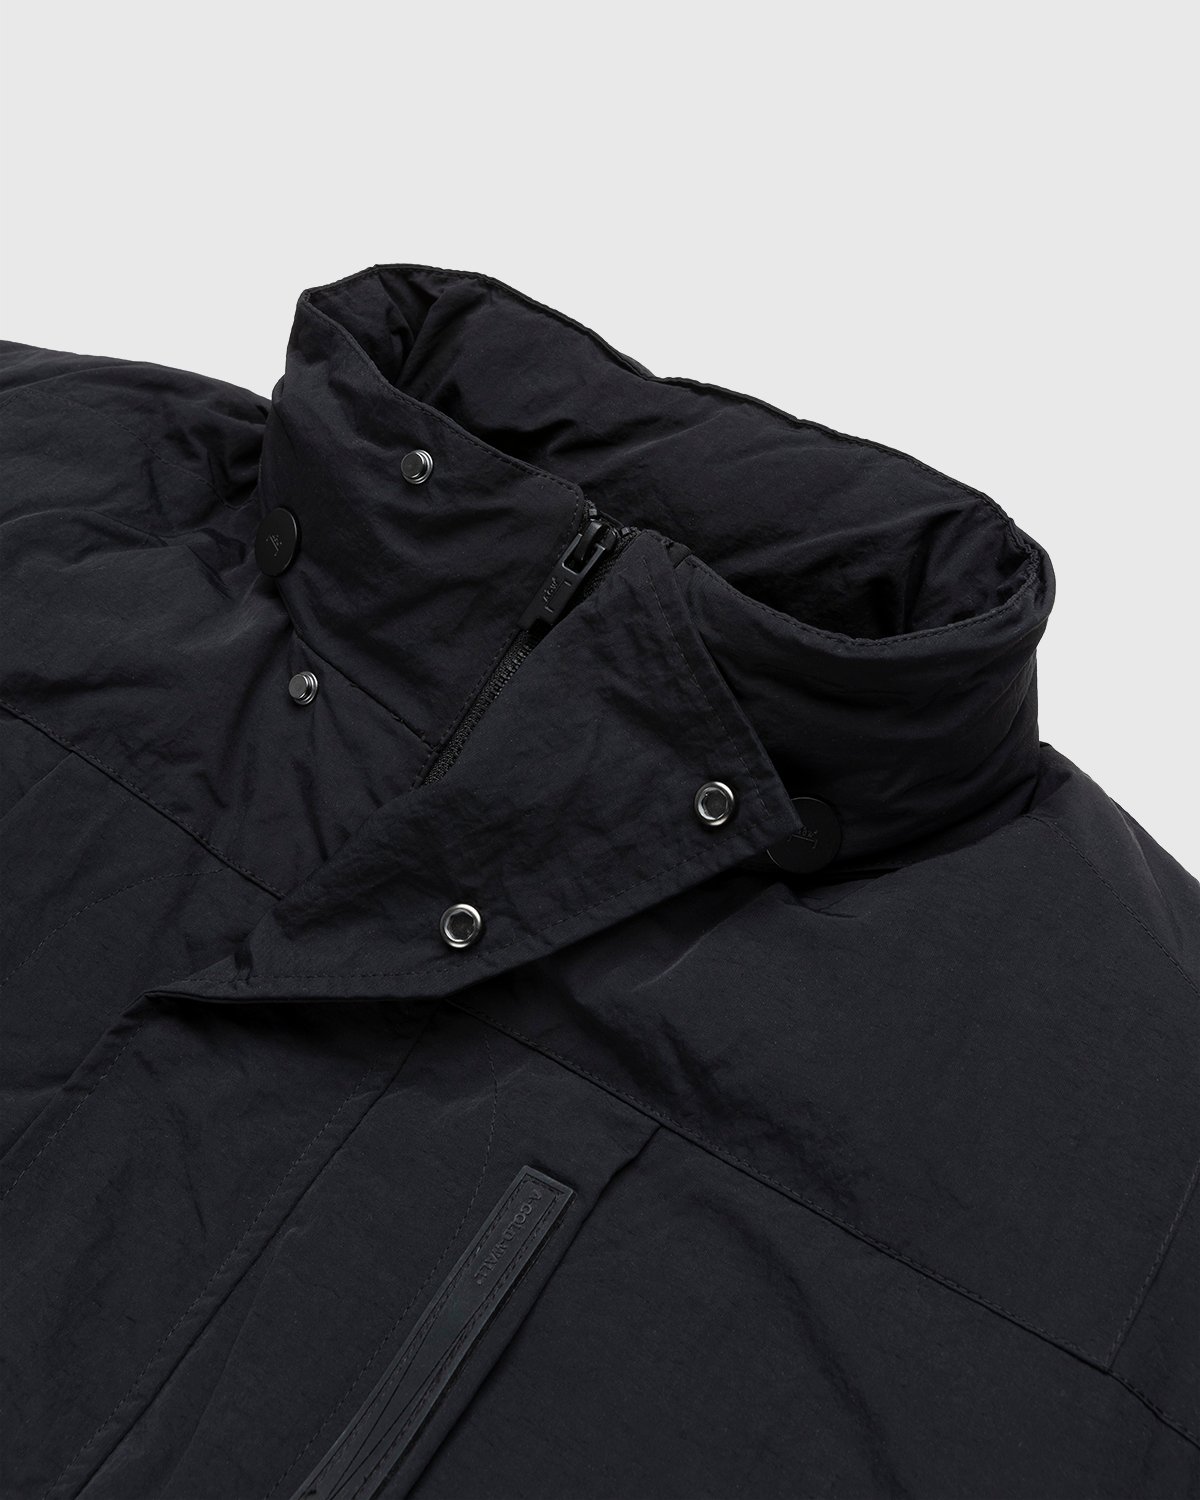 A-Cold-Wall* - Cirrus Jacket Black - Clothing - Black - Image 3